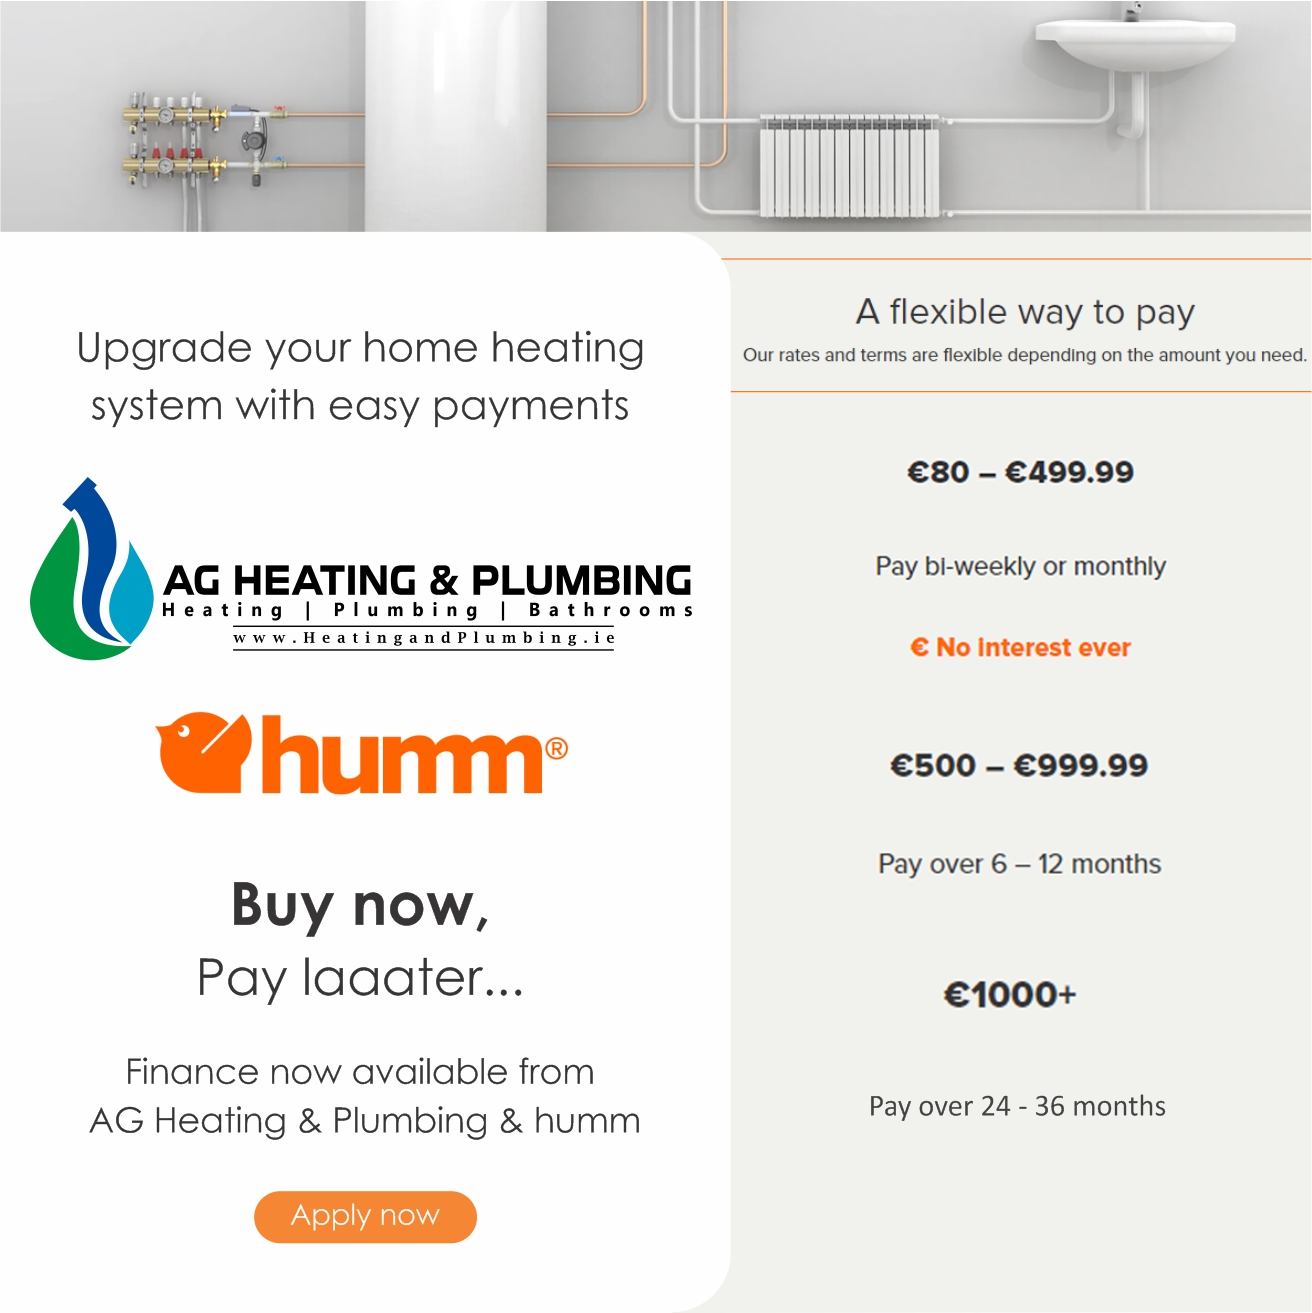 AG Heating & Plumbing Finance Facebook Advert